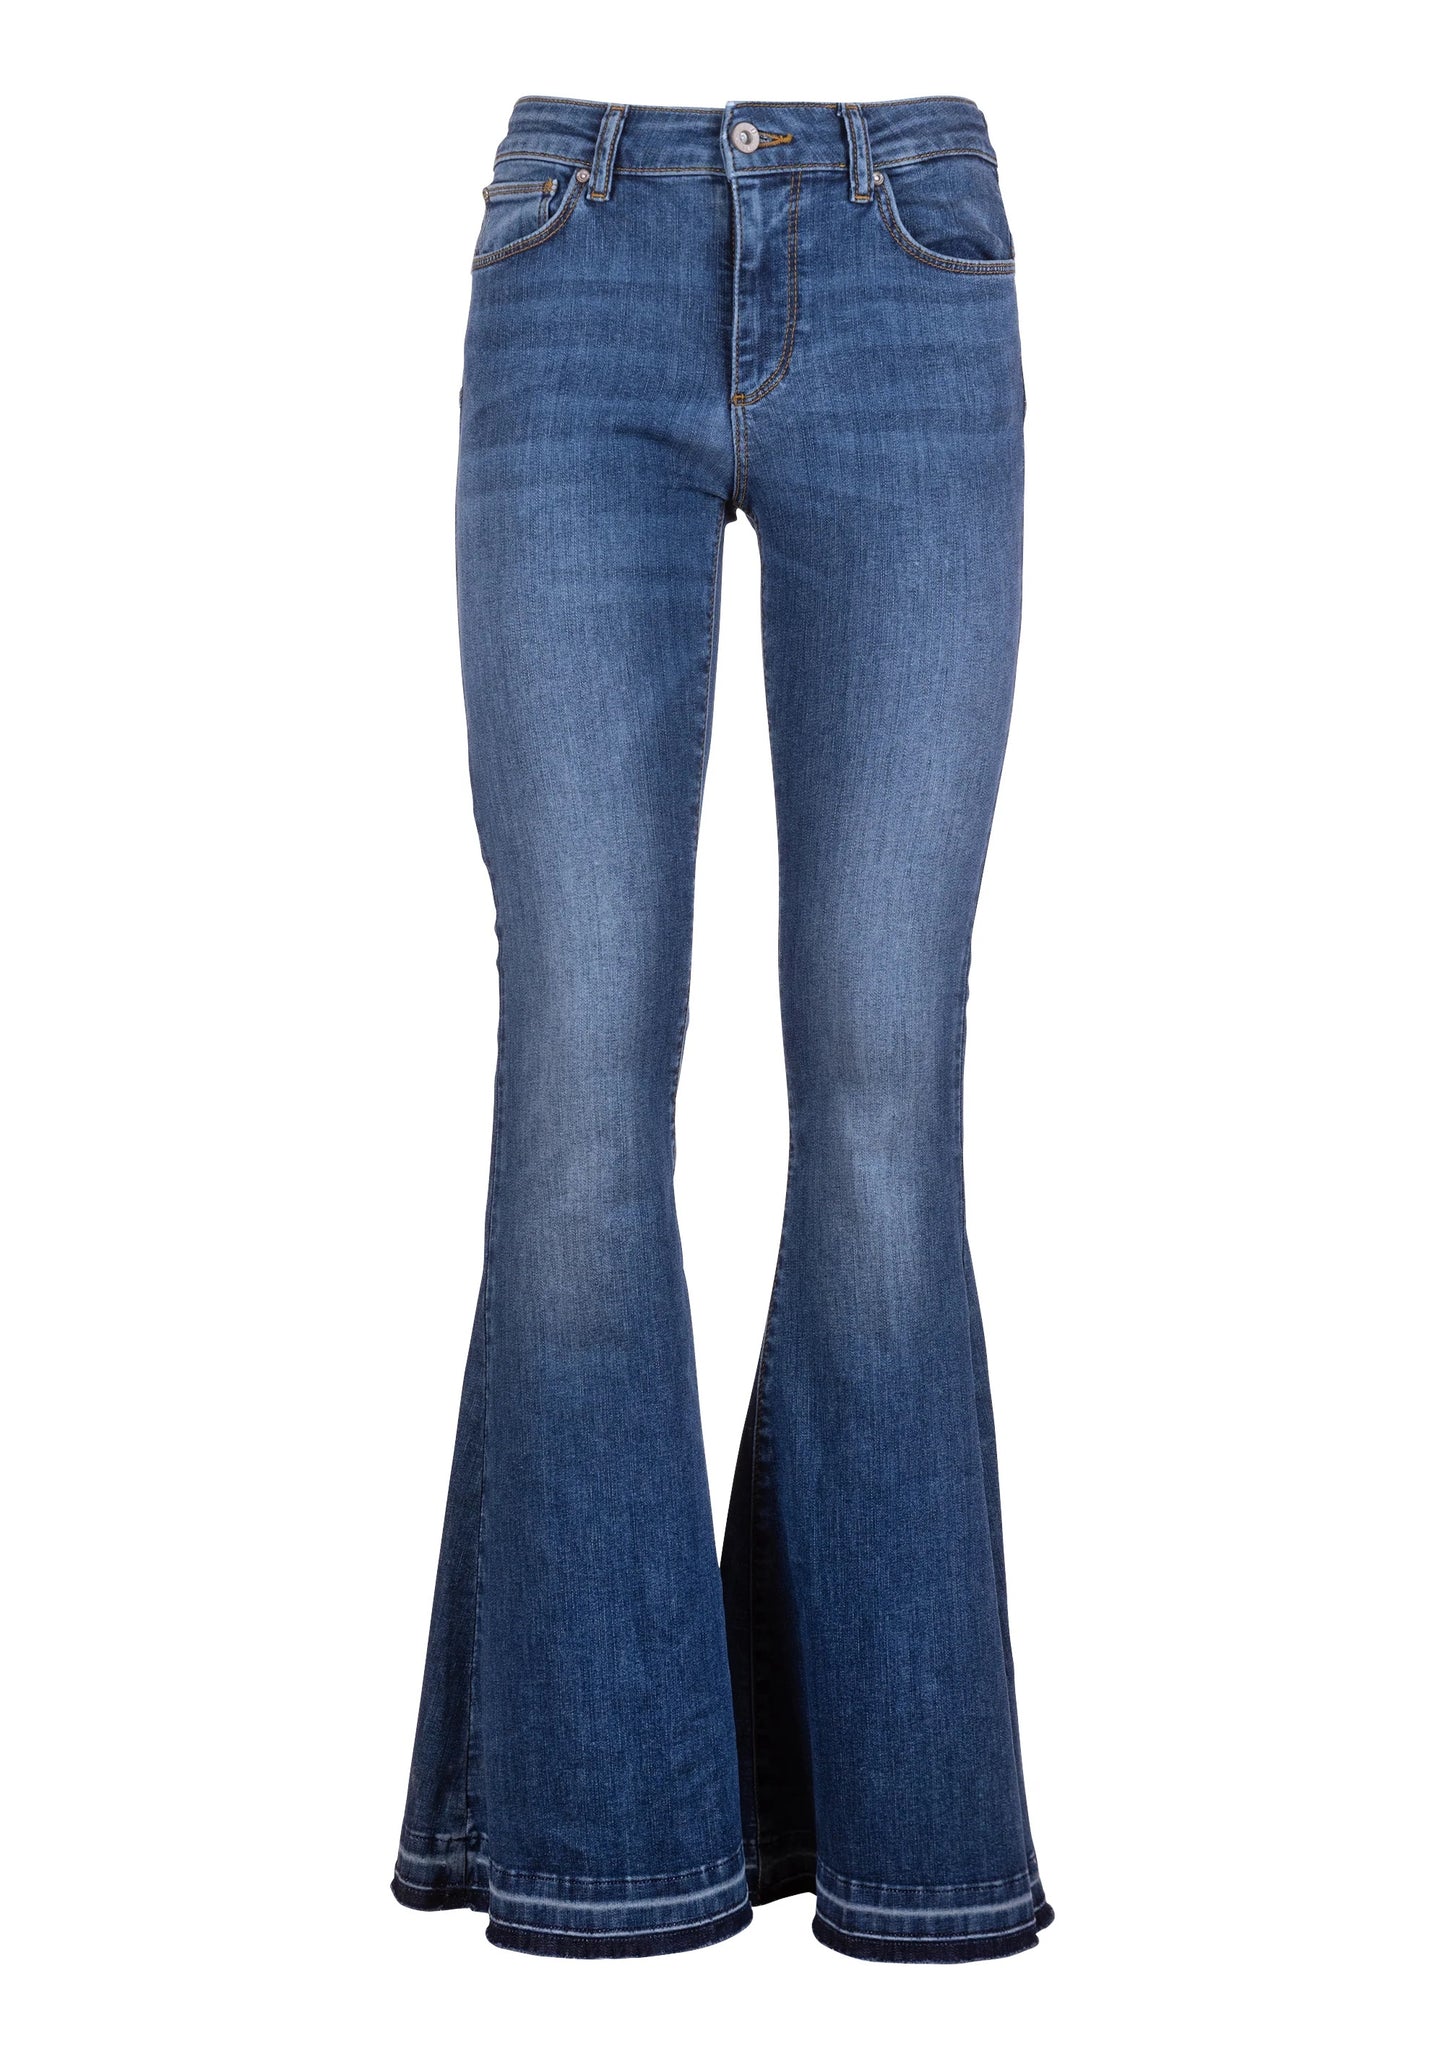 Fracomina jeans donna bella s1 s bootcut medium stone